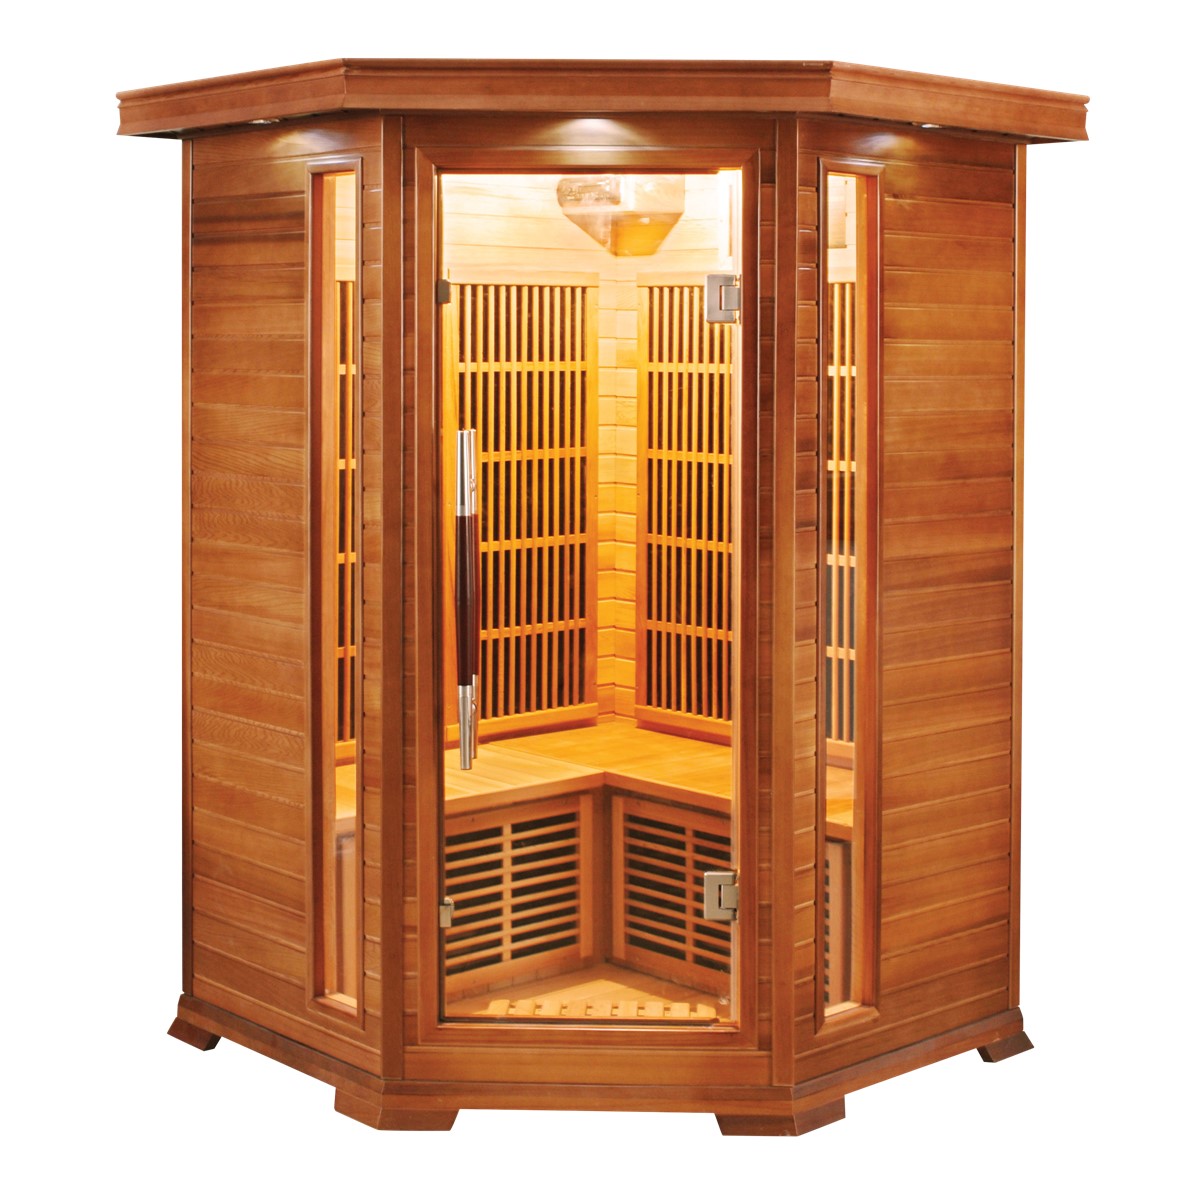 Sauna Infrarouge LUXE - 2/3 places